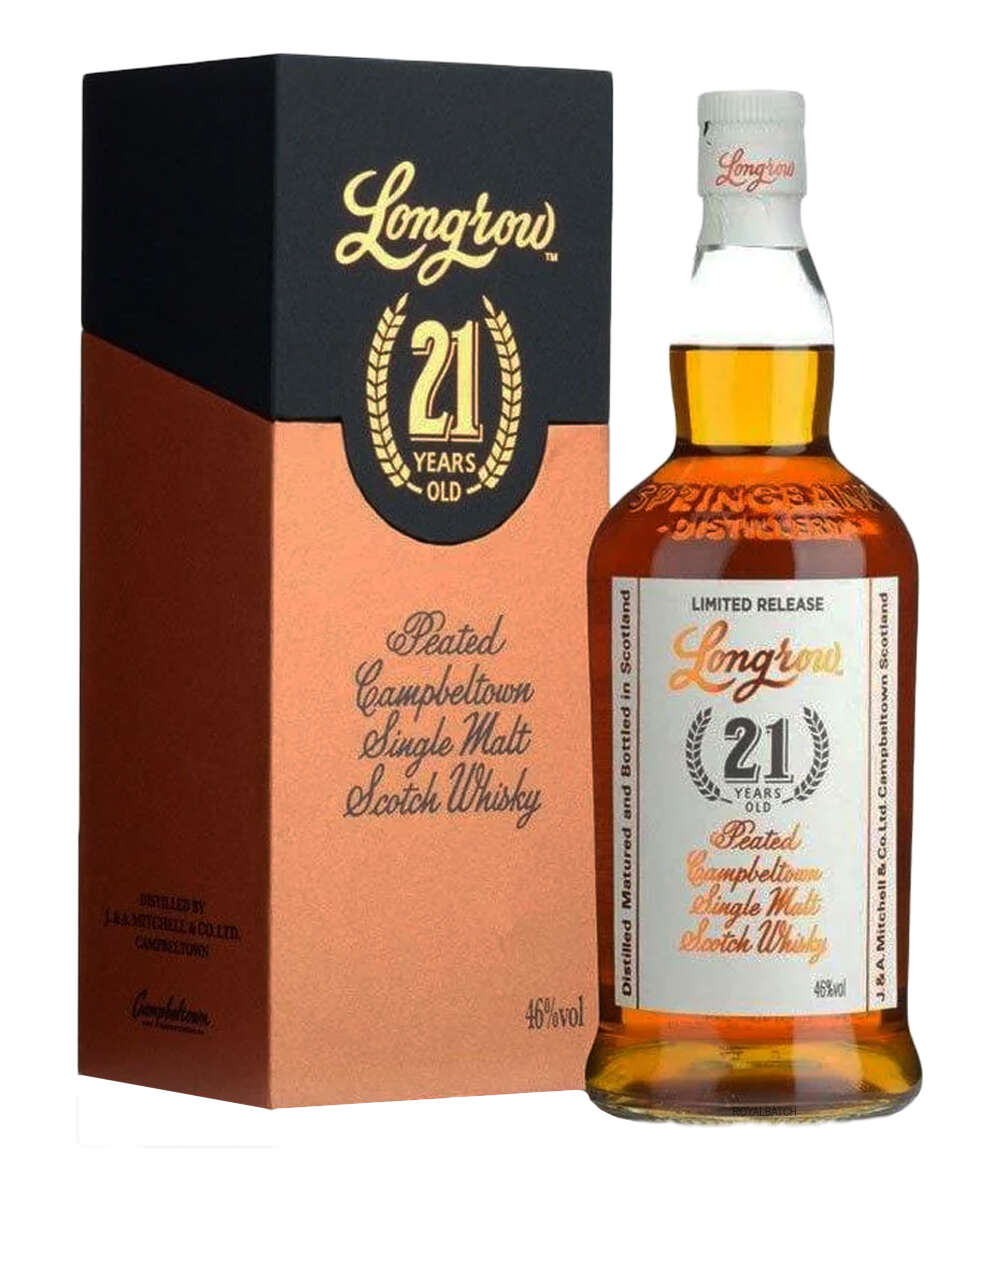 Longrow Peated Campbeltown 21 Year Old Single Malt Scotch Whisky